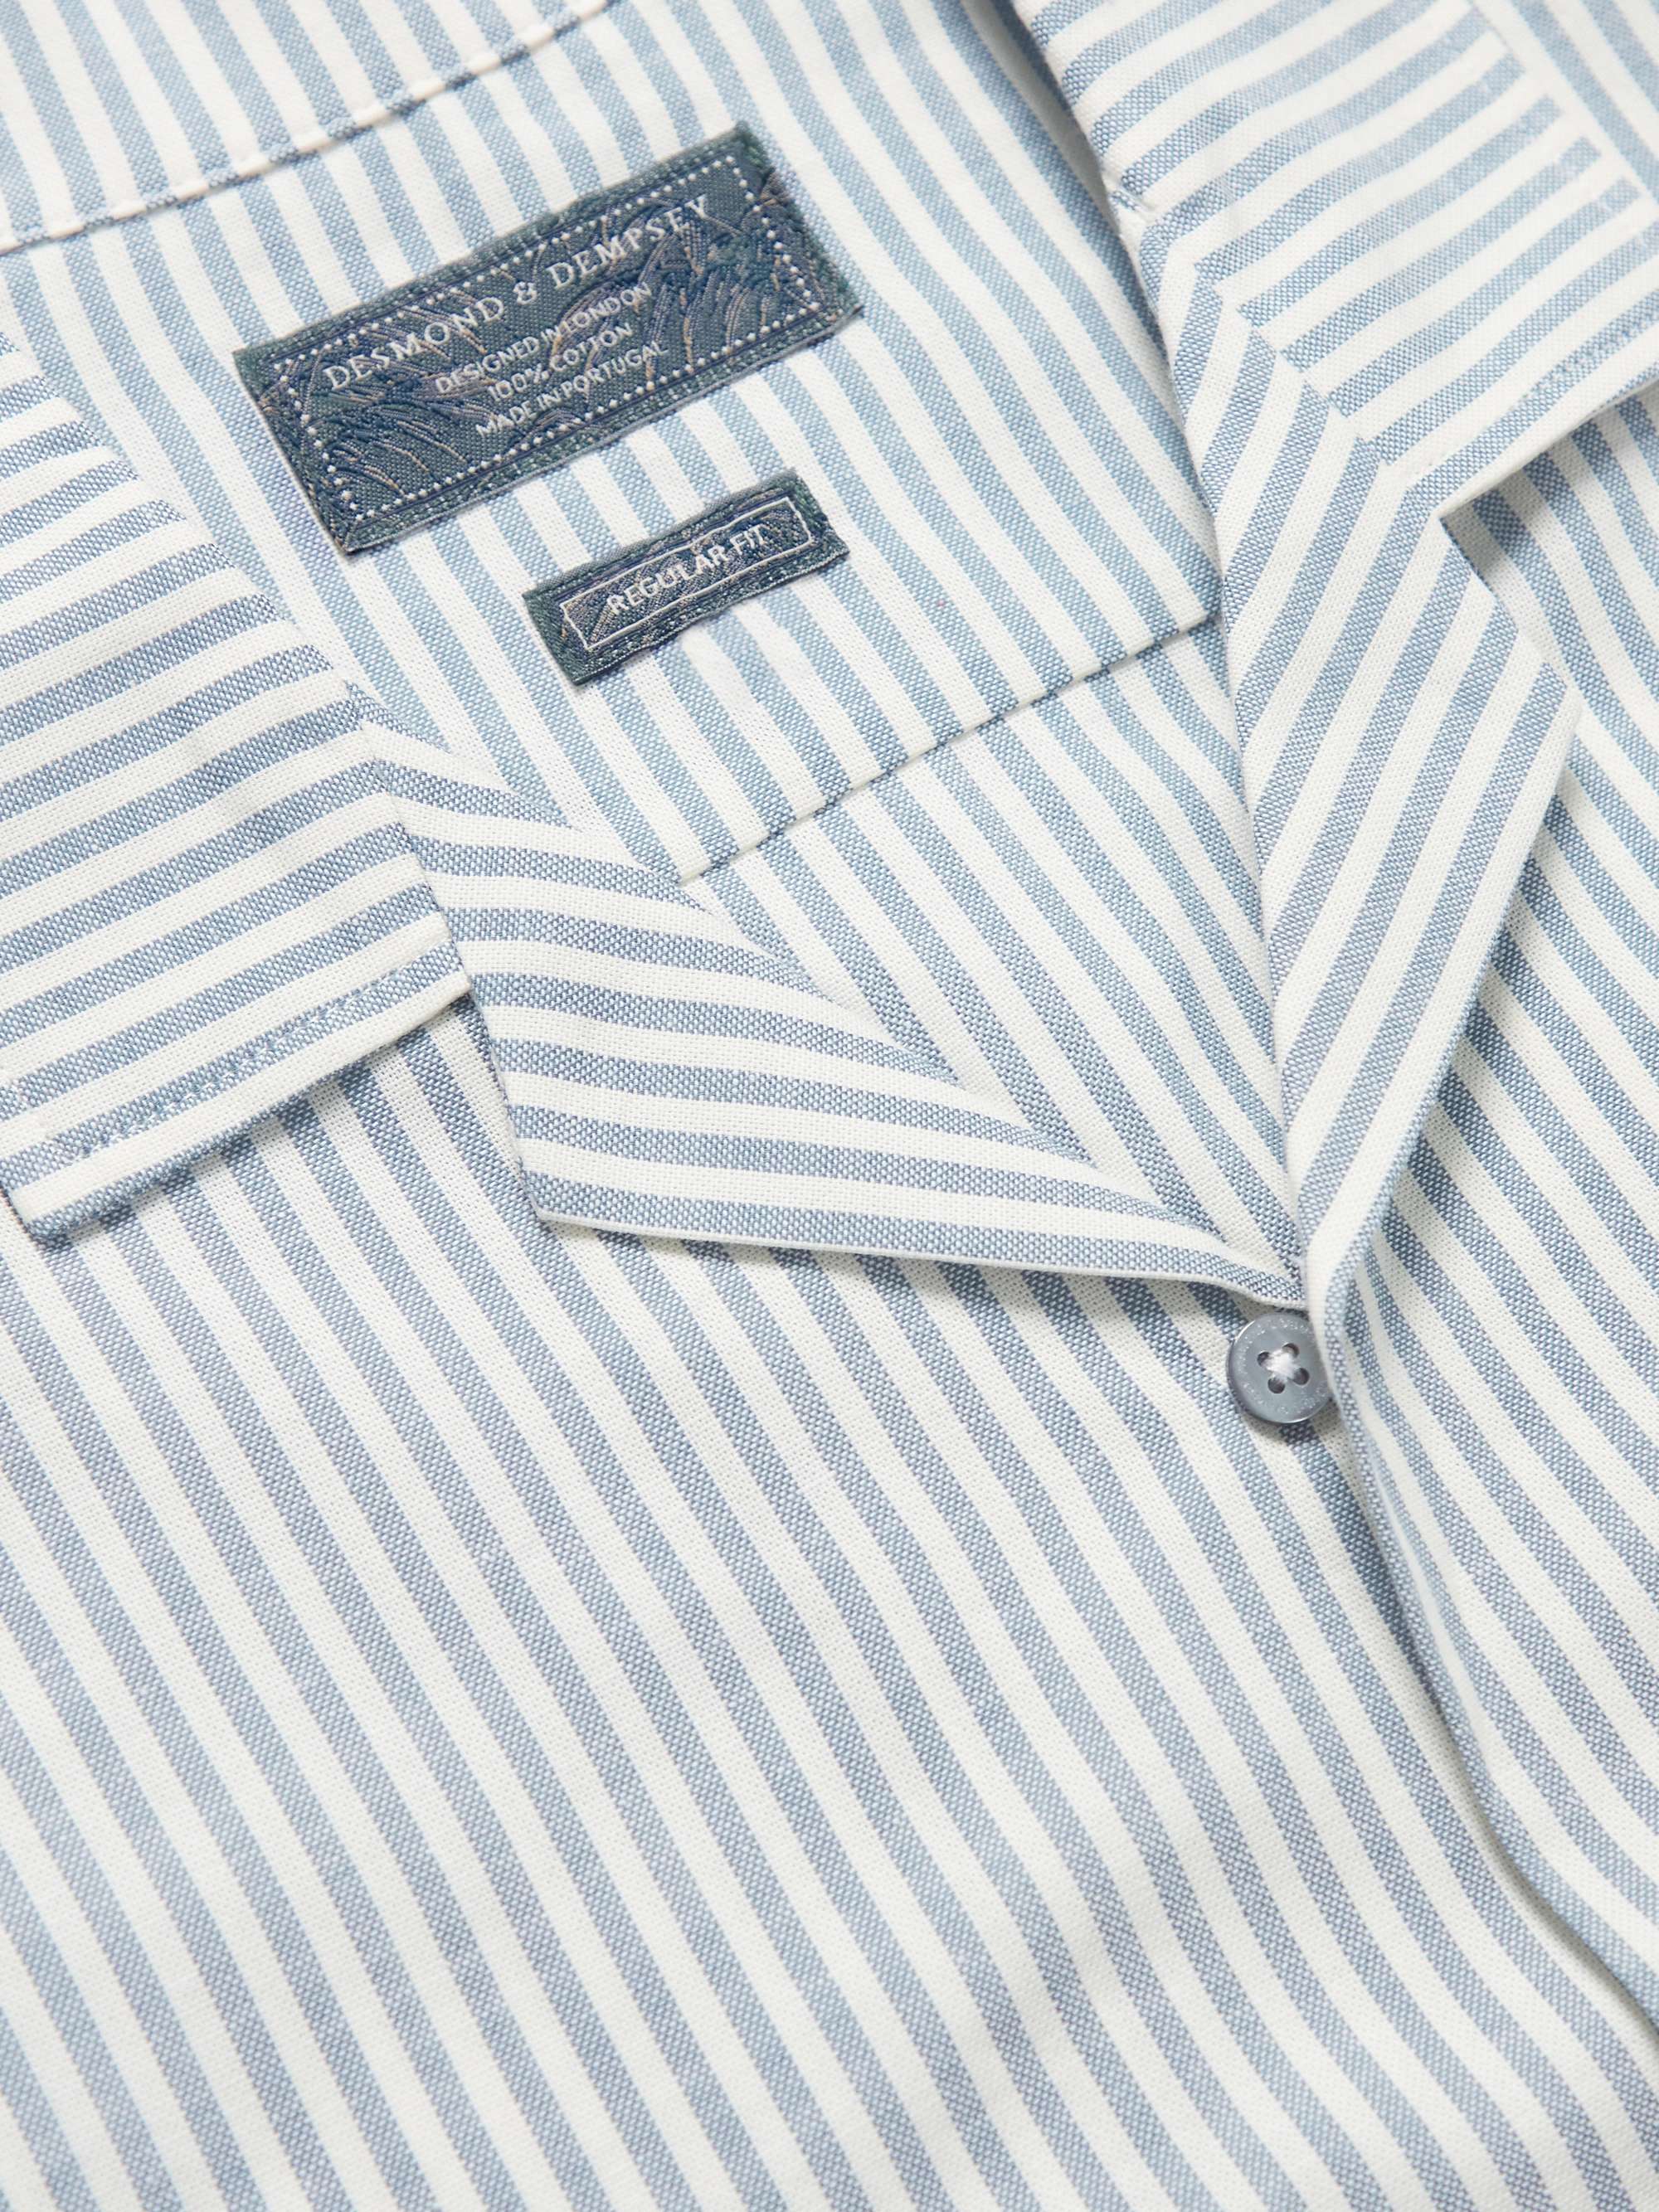 DESMOND & DEMPSEY Embroidered Striped Cotton Oxford Pyjama Set